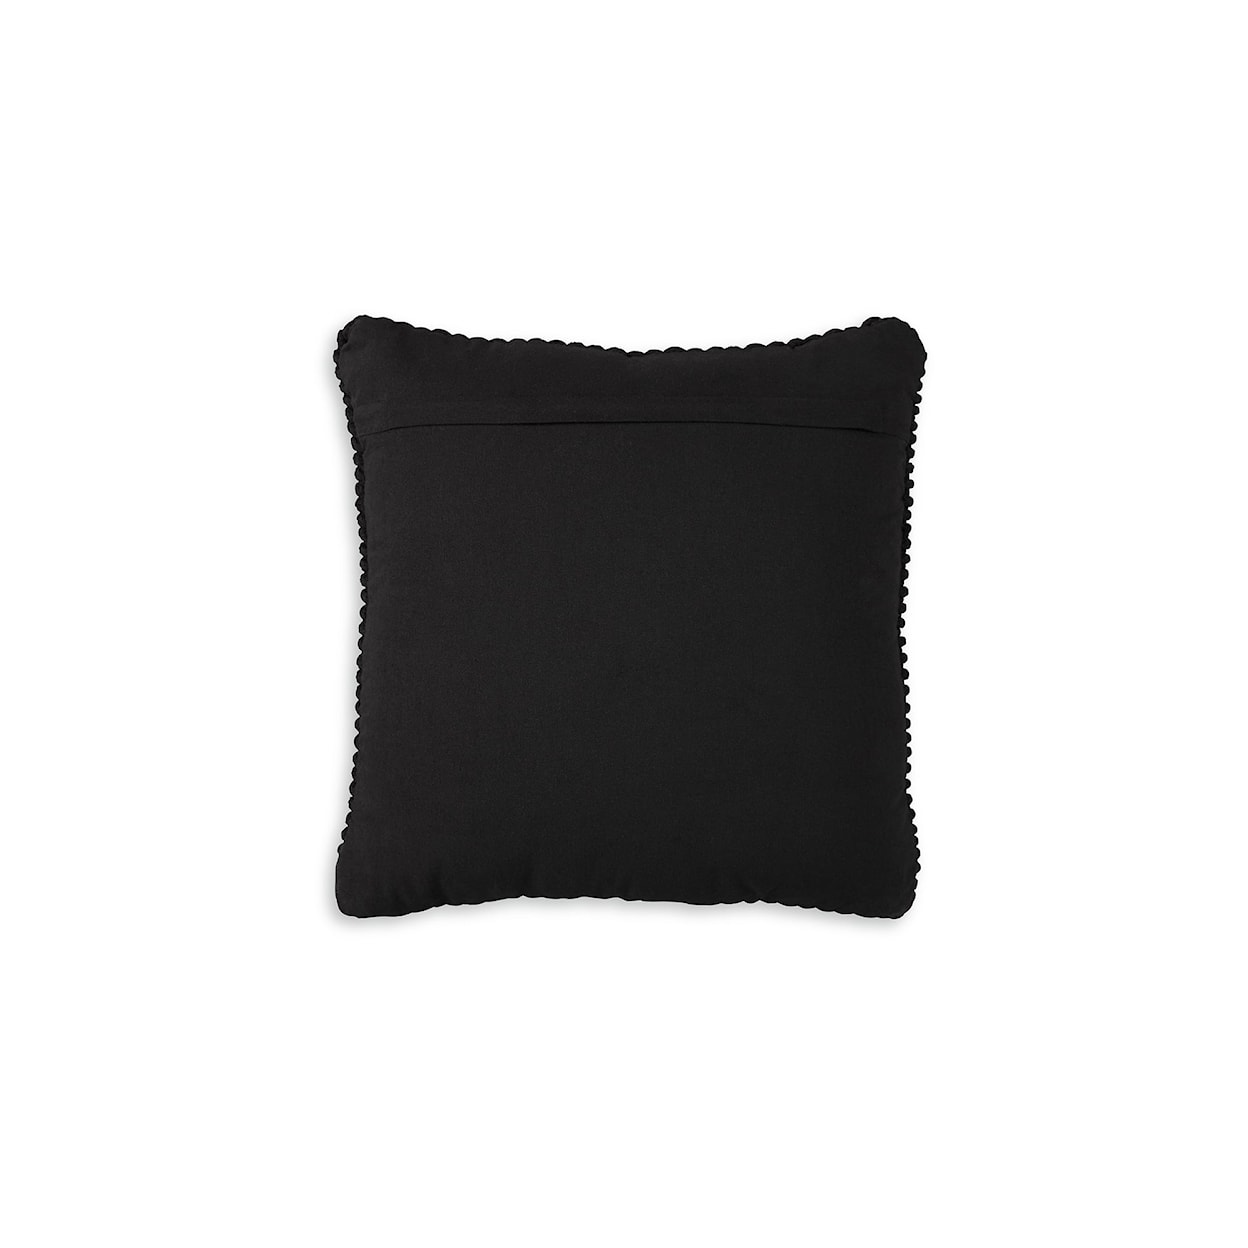 Ashley Signature Design Renemore Pillow (Set of 4)